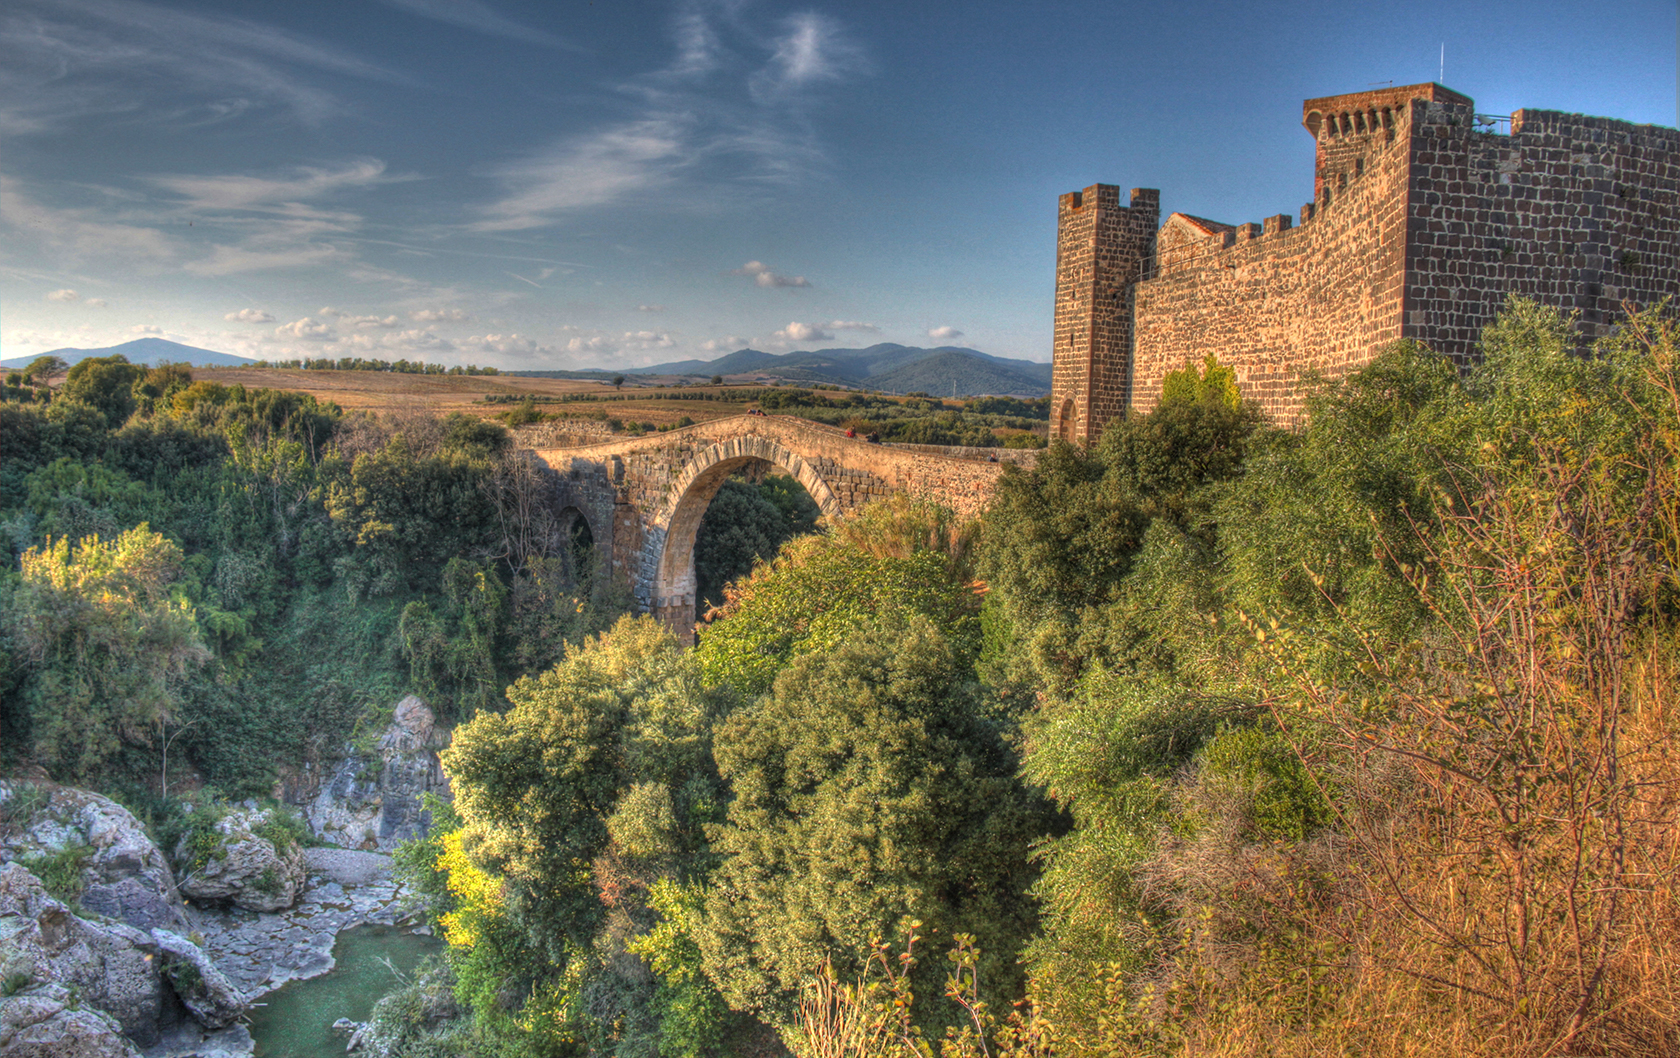 The Ponte dell’Abadia - a Roman bridge build on an Etruscan foundation